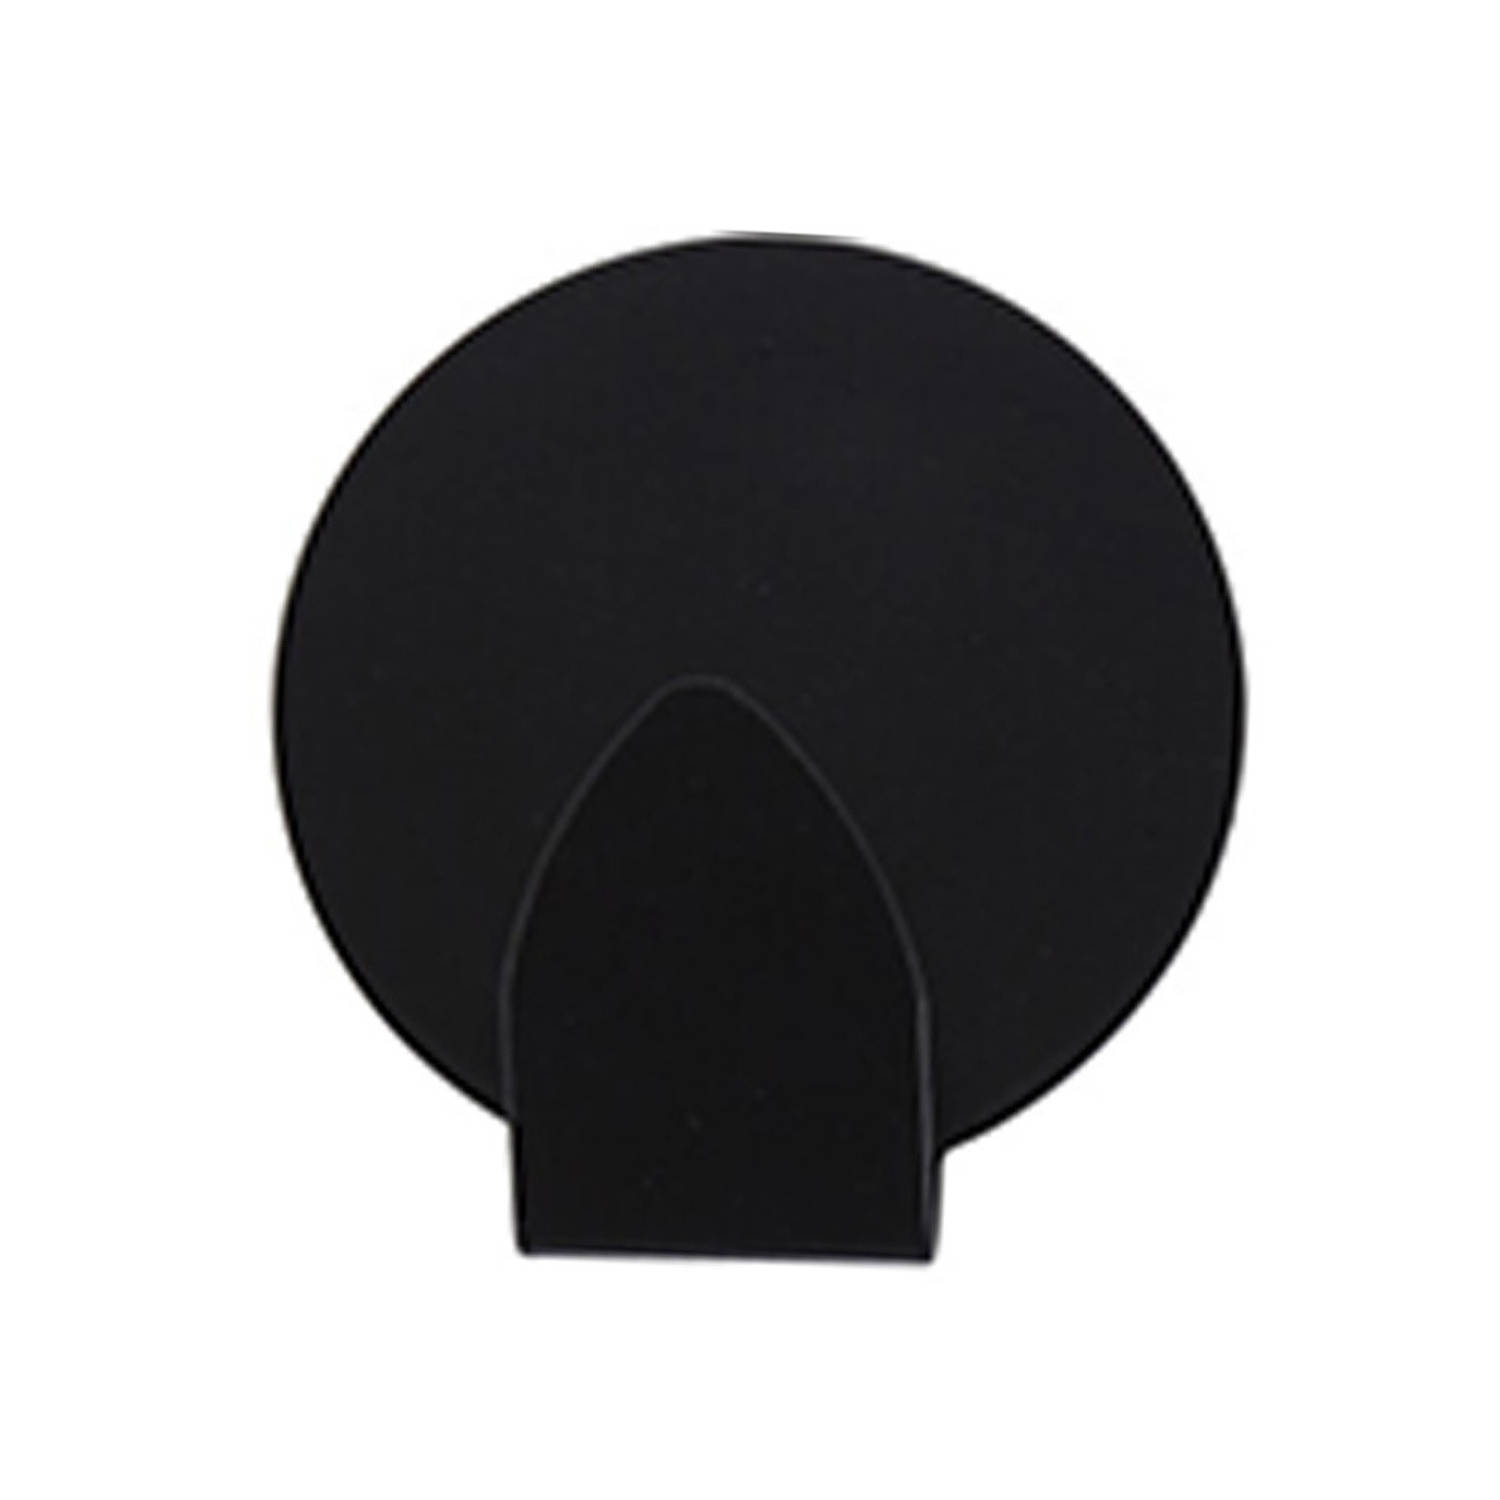 Zelfklevende Haakjes Rvs Keuken-badkamer-kleding-ophang Zwart 4x Handdoekhaakjes